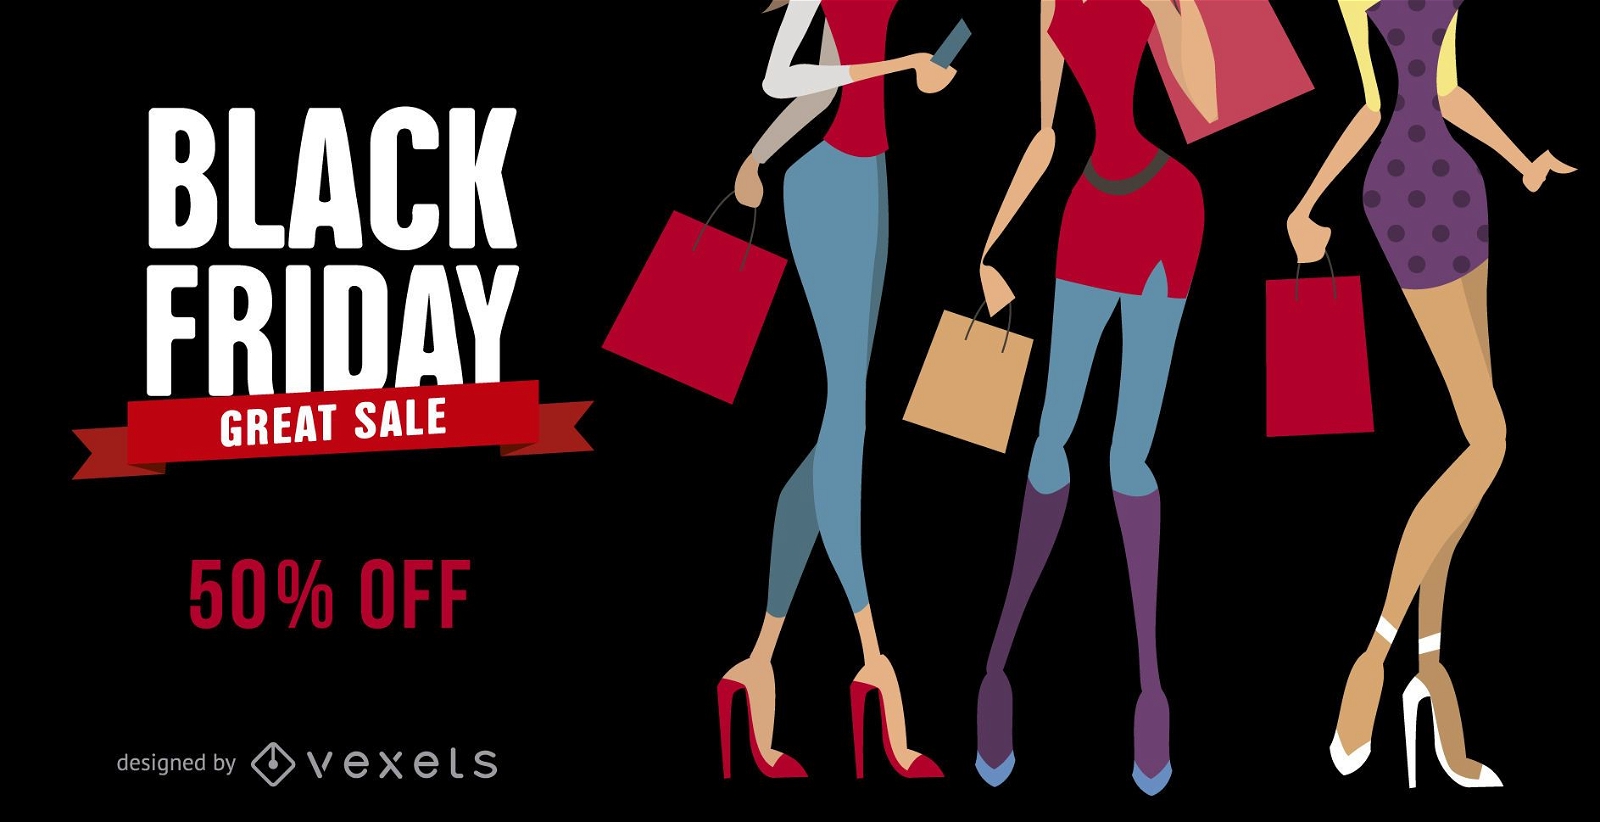 Black Friday fashion sale banner